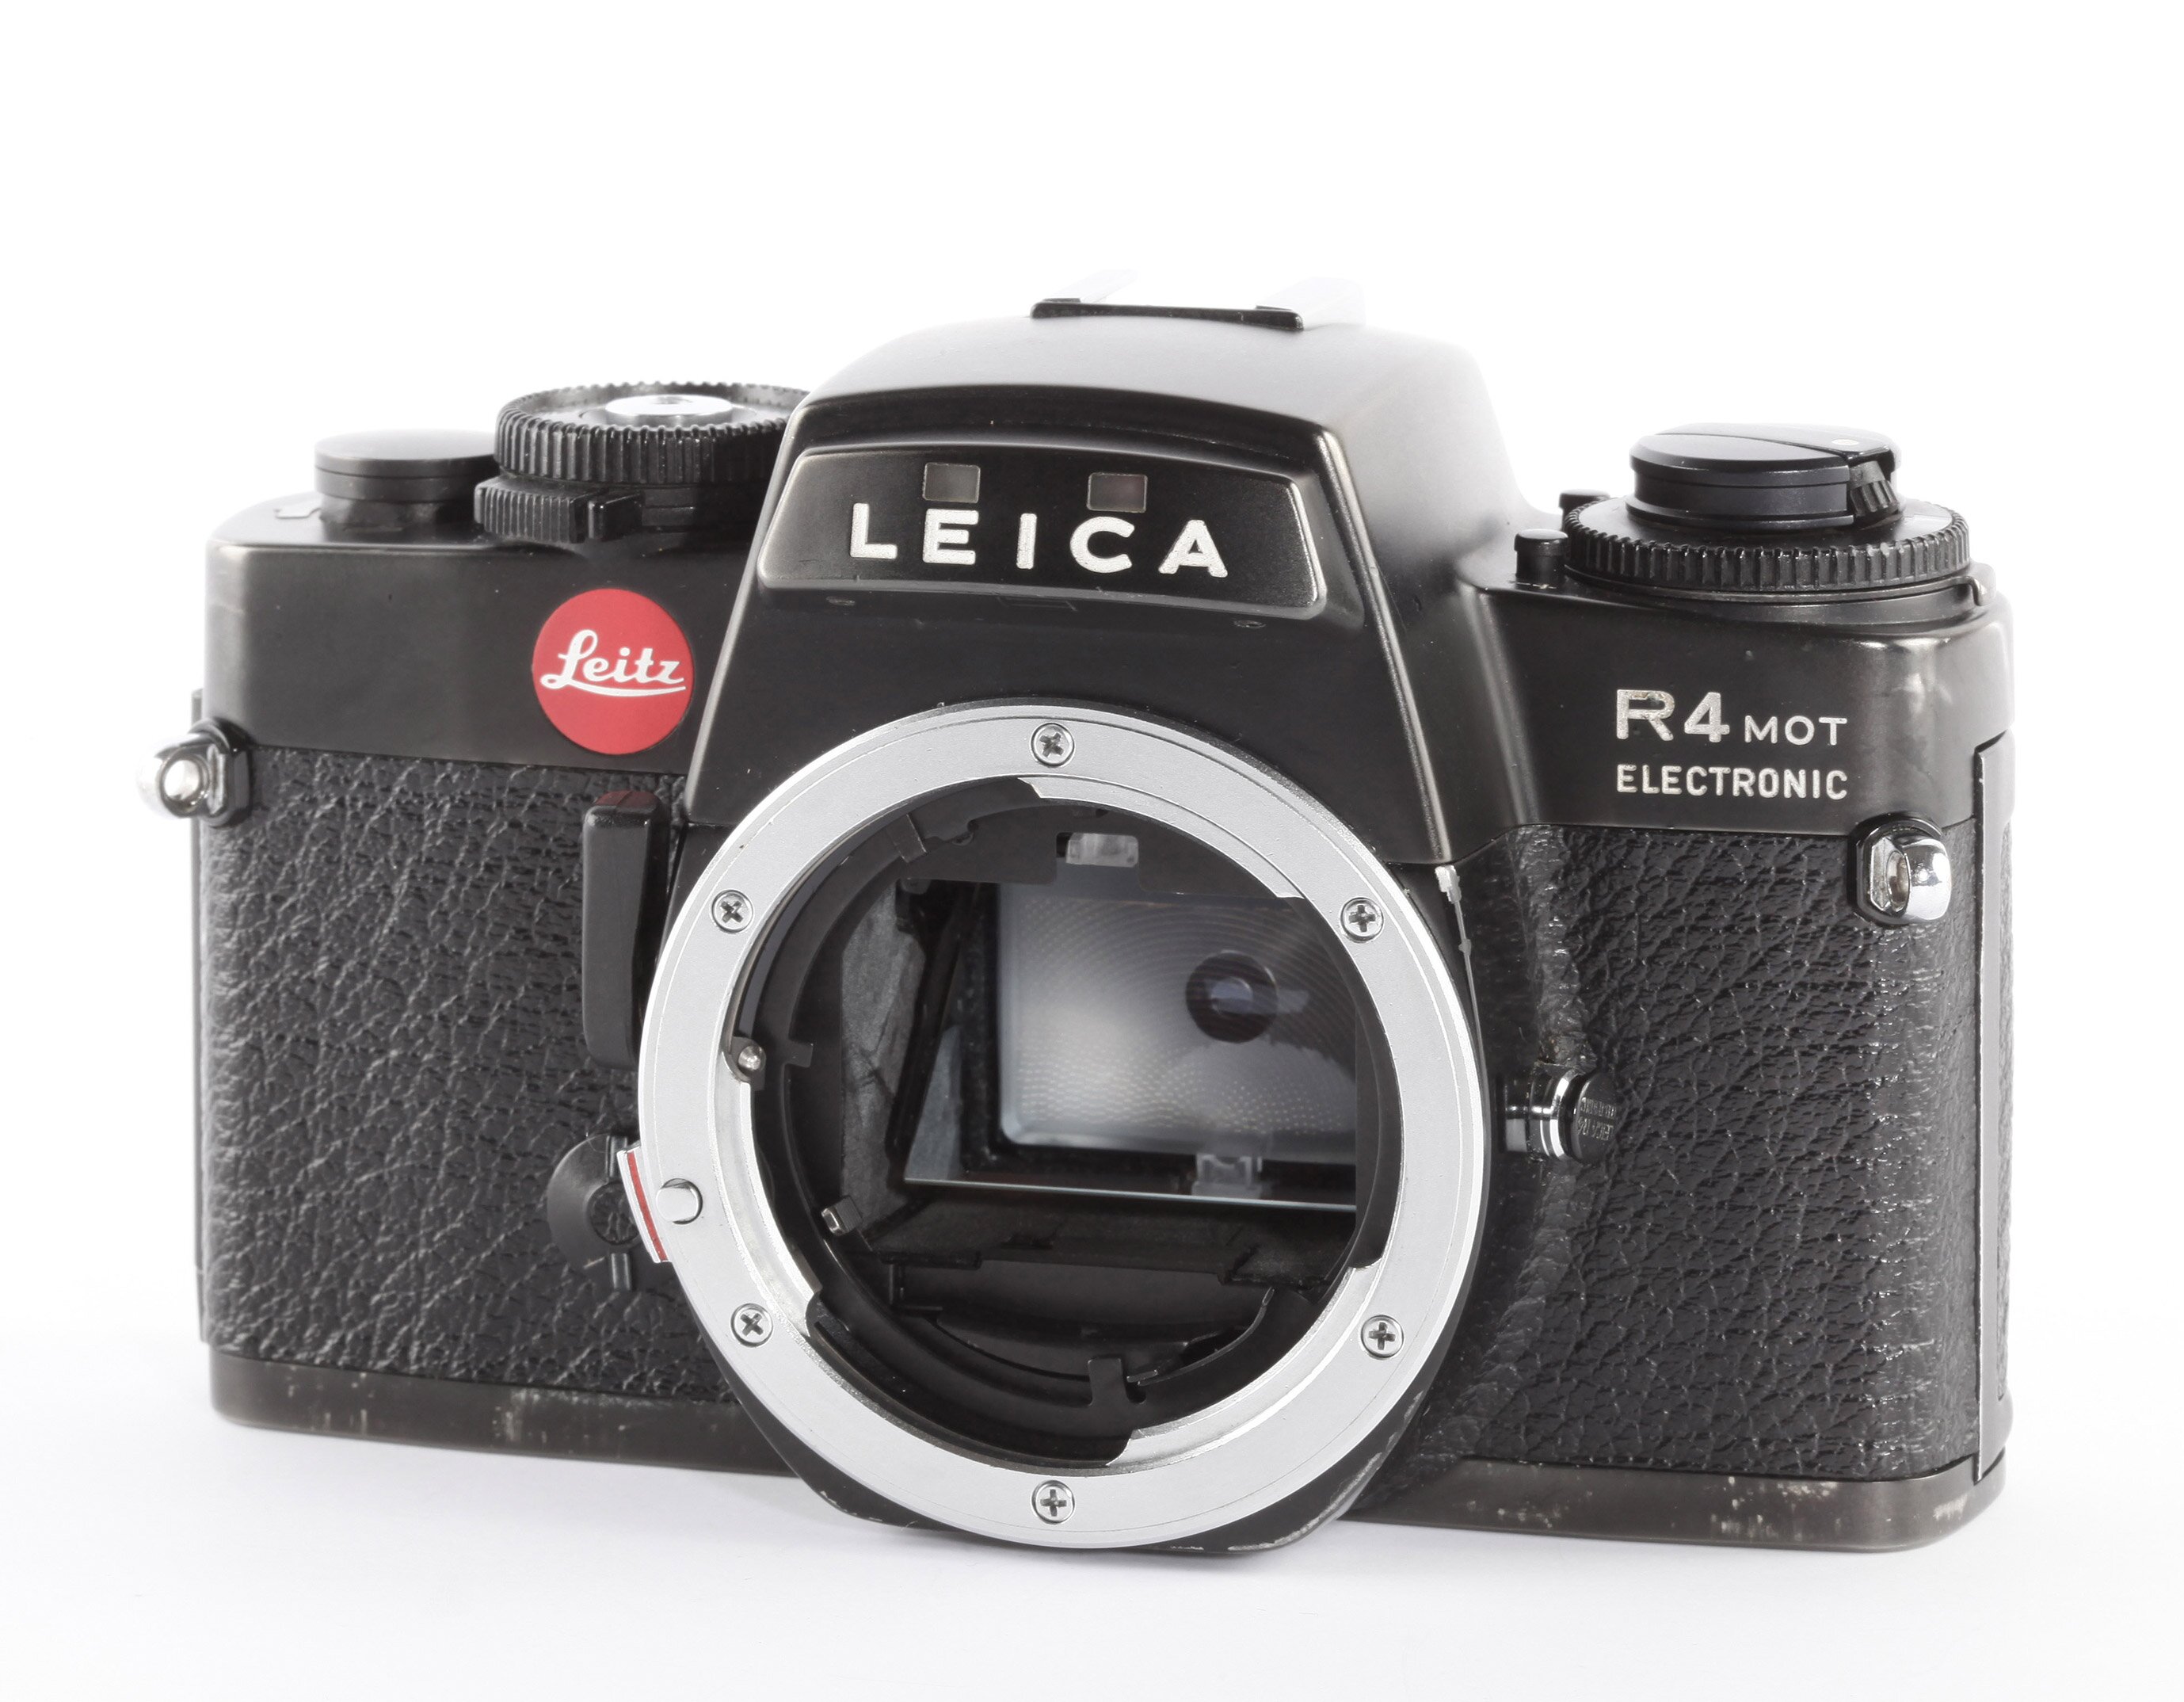 Leica R4 Mot electronic